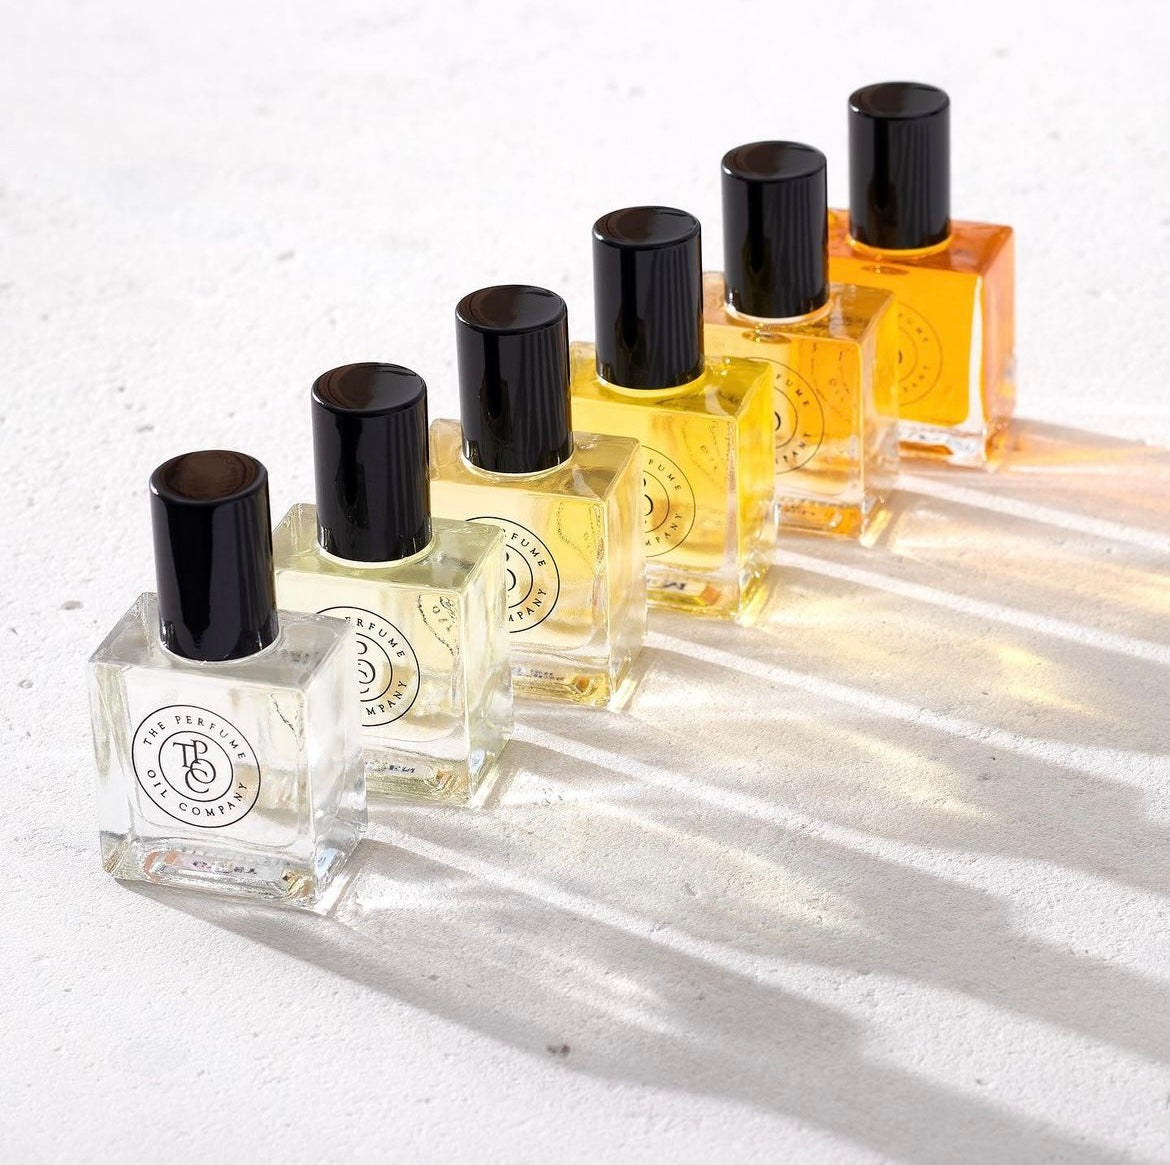 The Perfume Oil Collection Box Set - Fresh